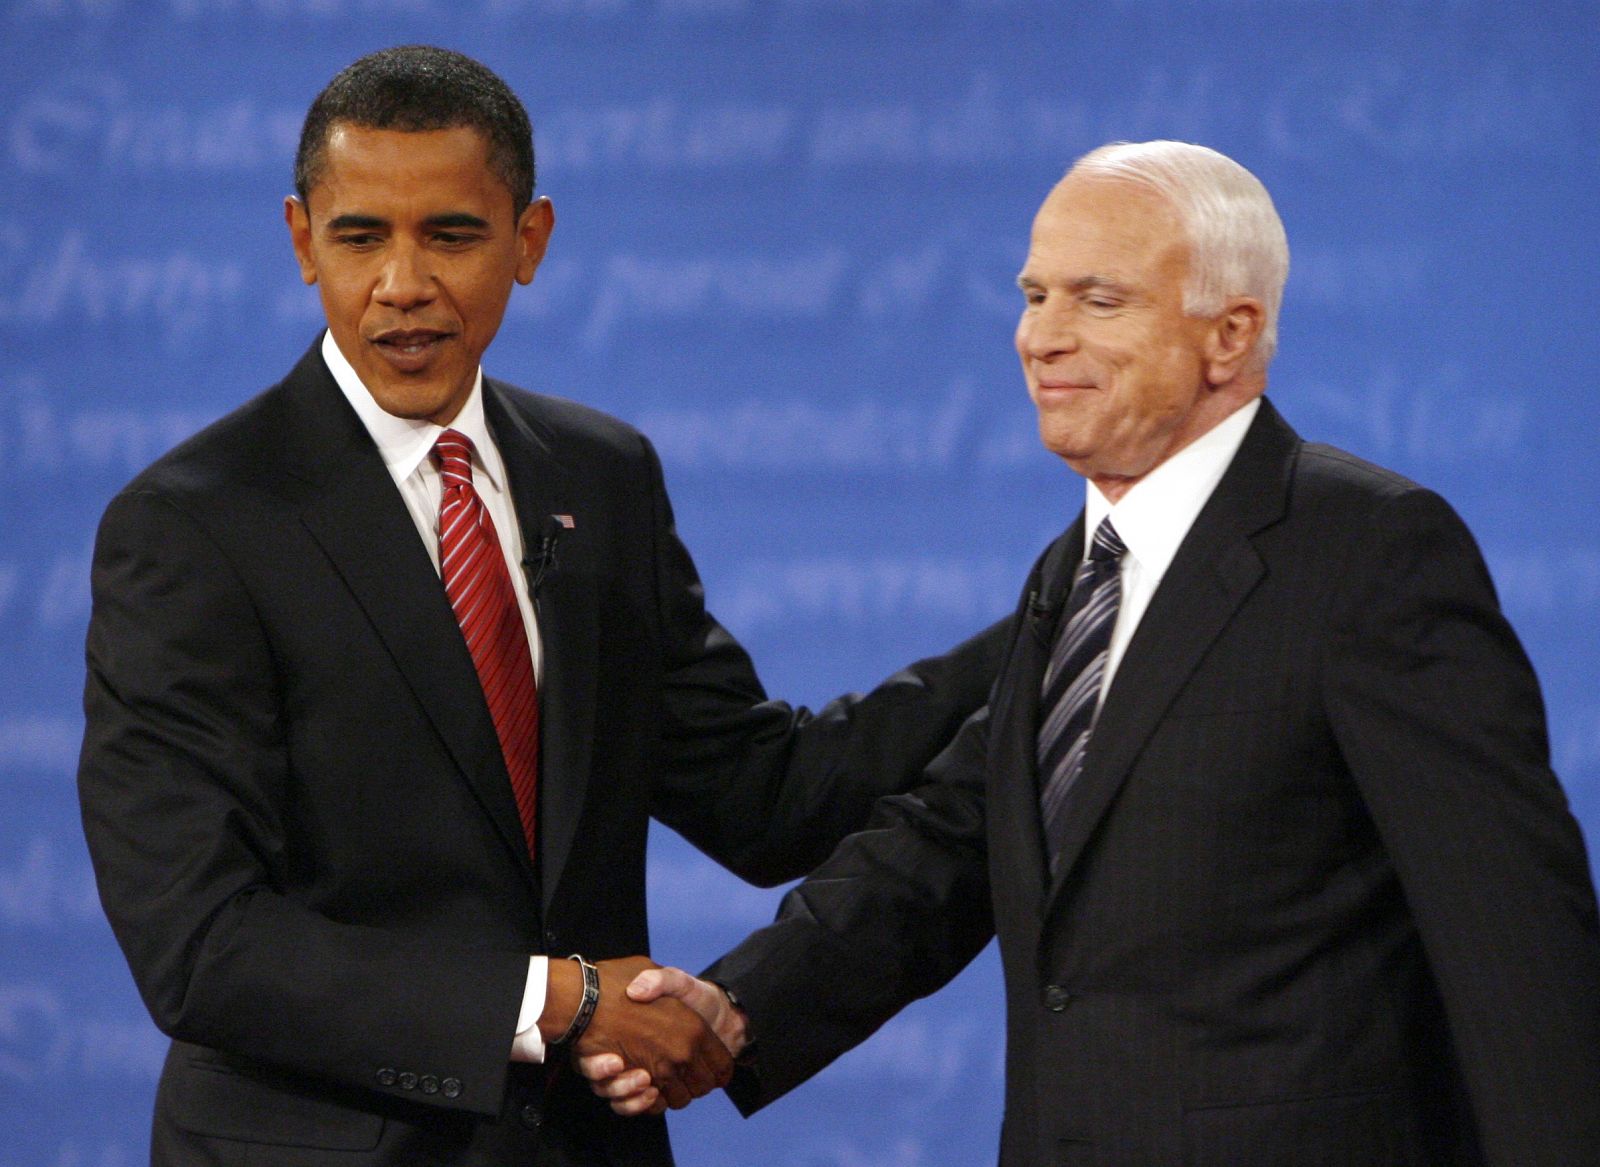 Obama saluda a McCain al principio del debate